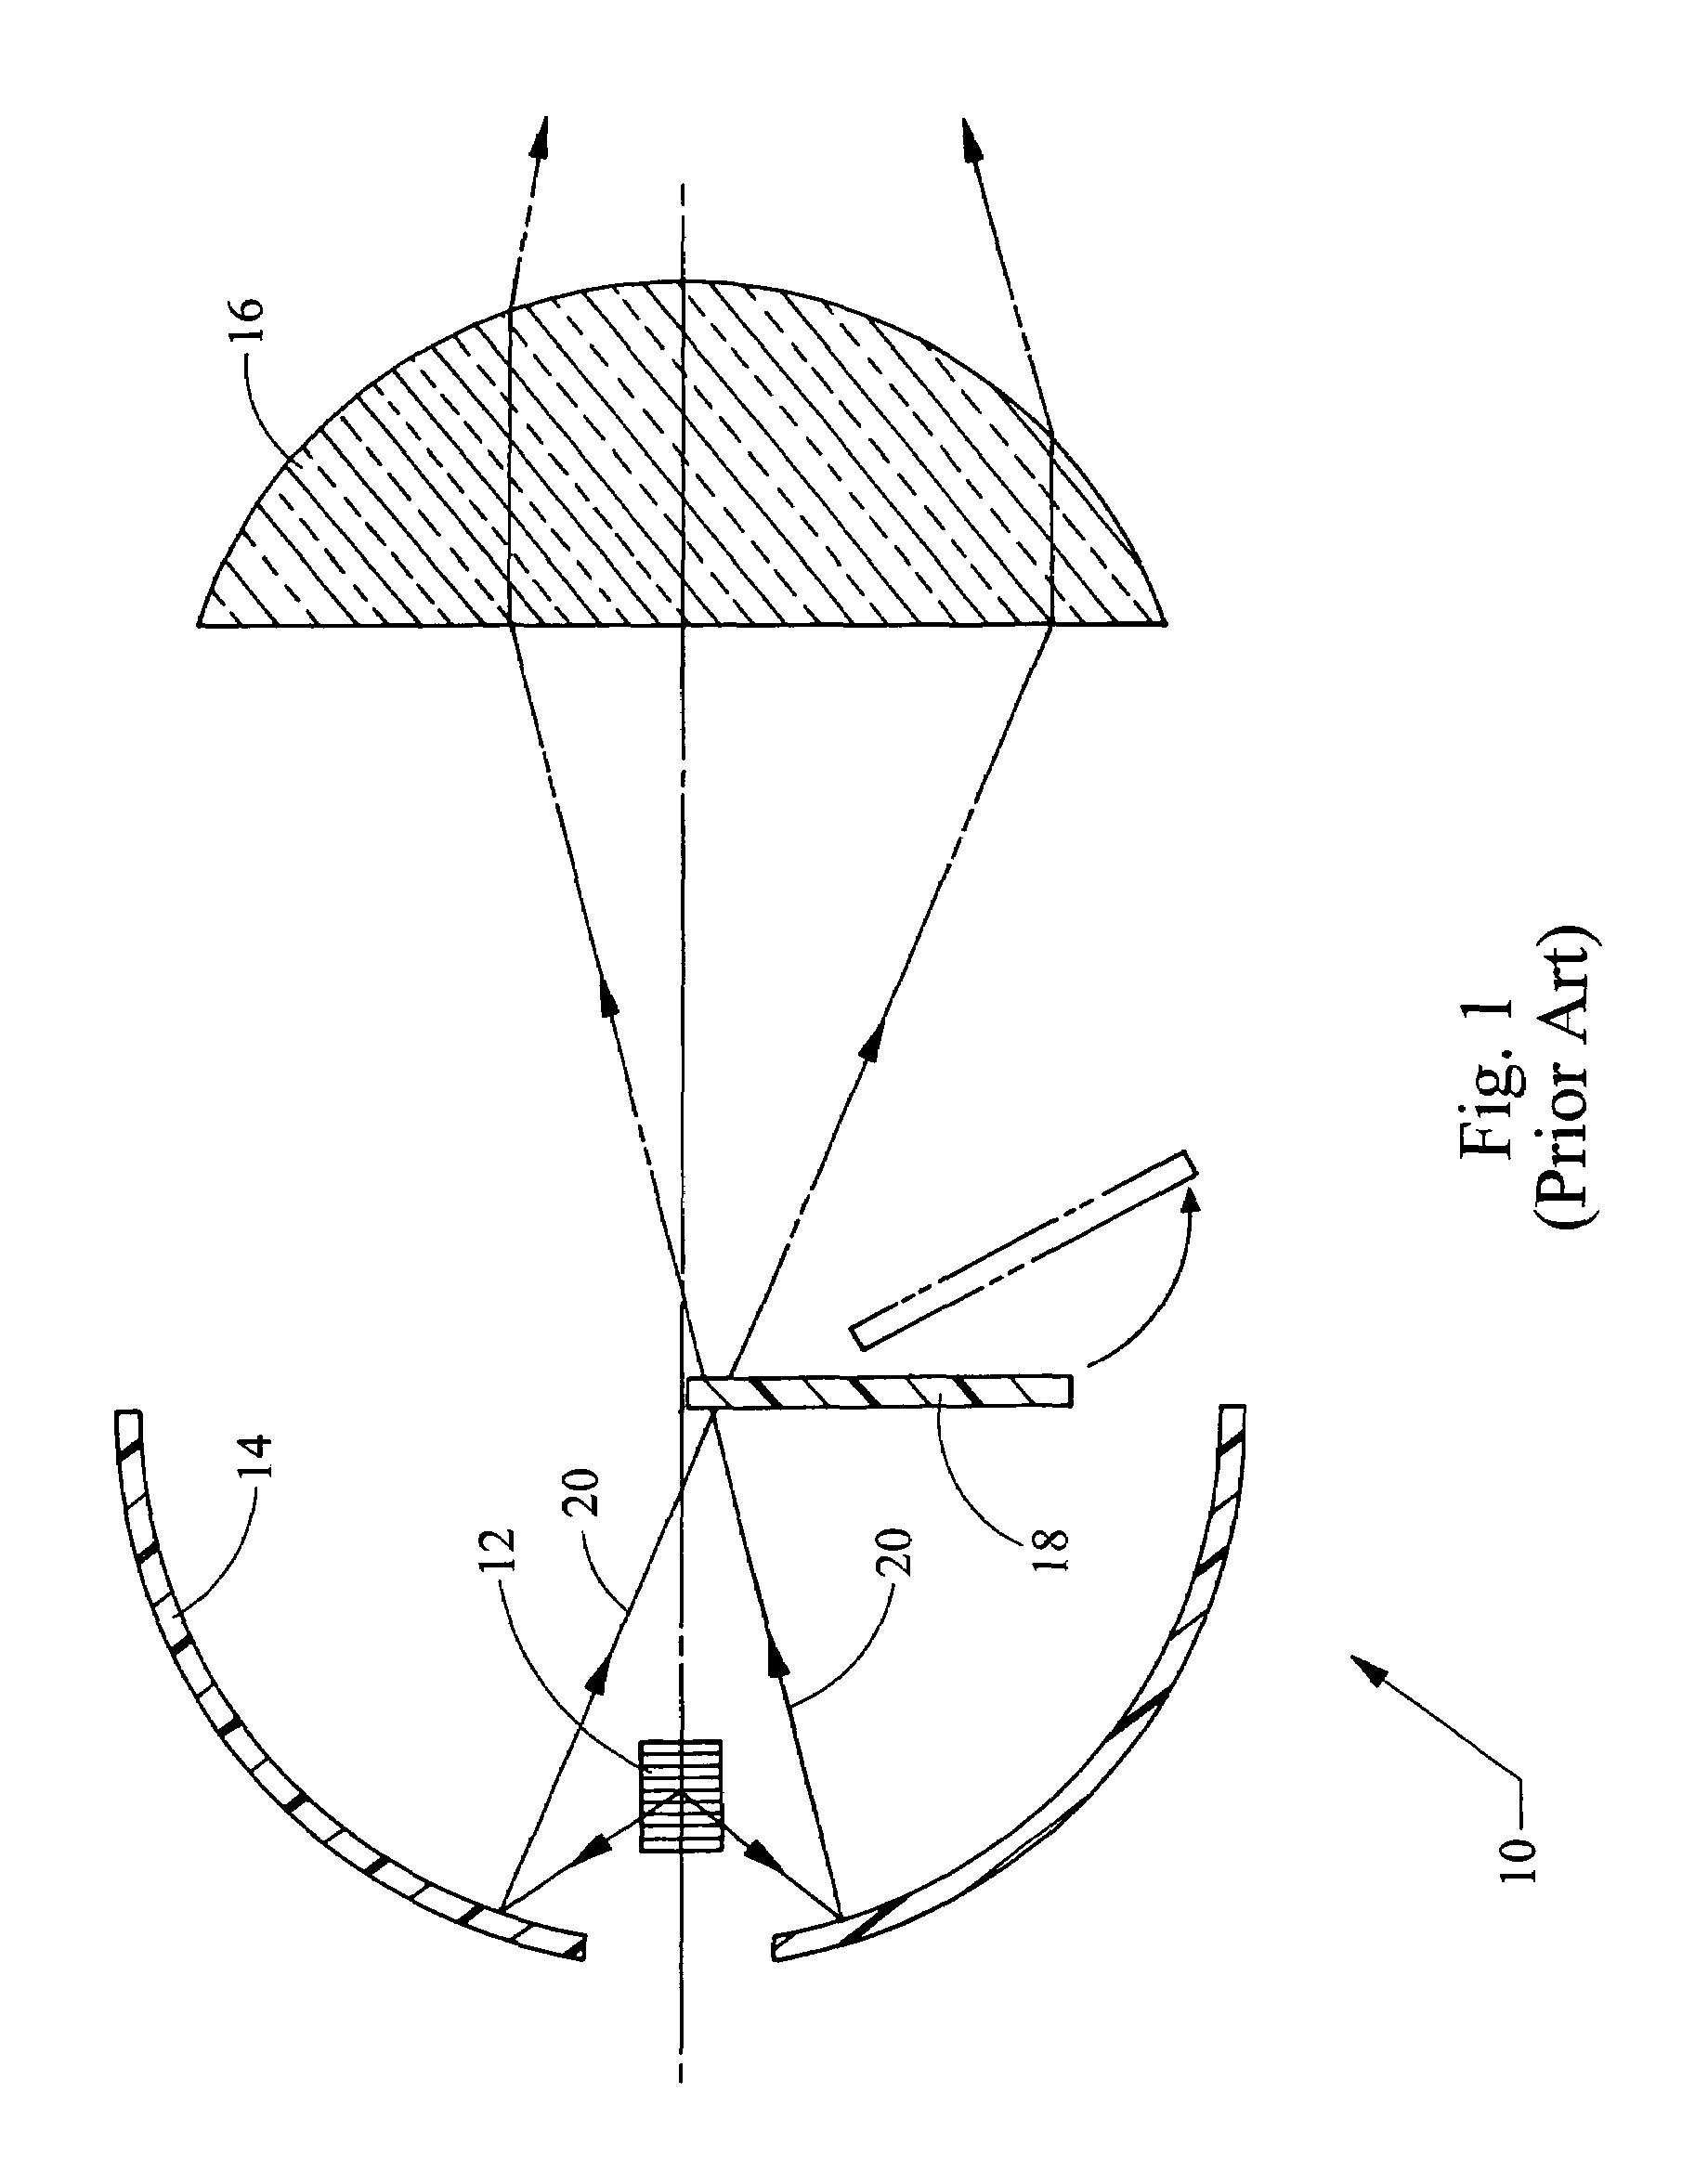 Multi-focal lens for bi-functional headlamp